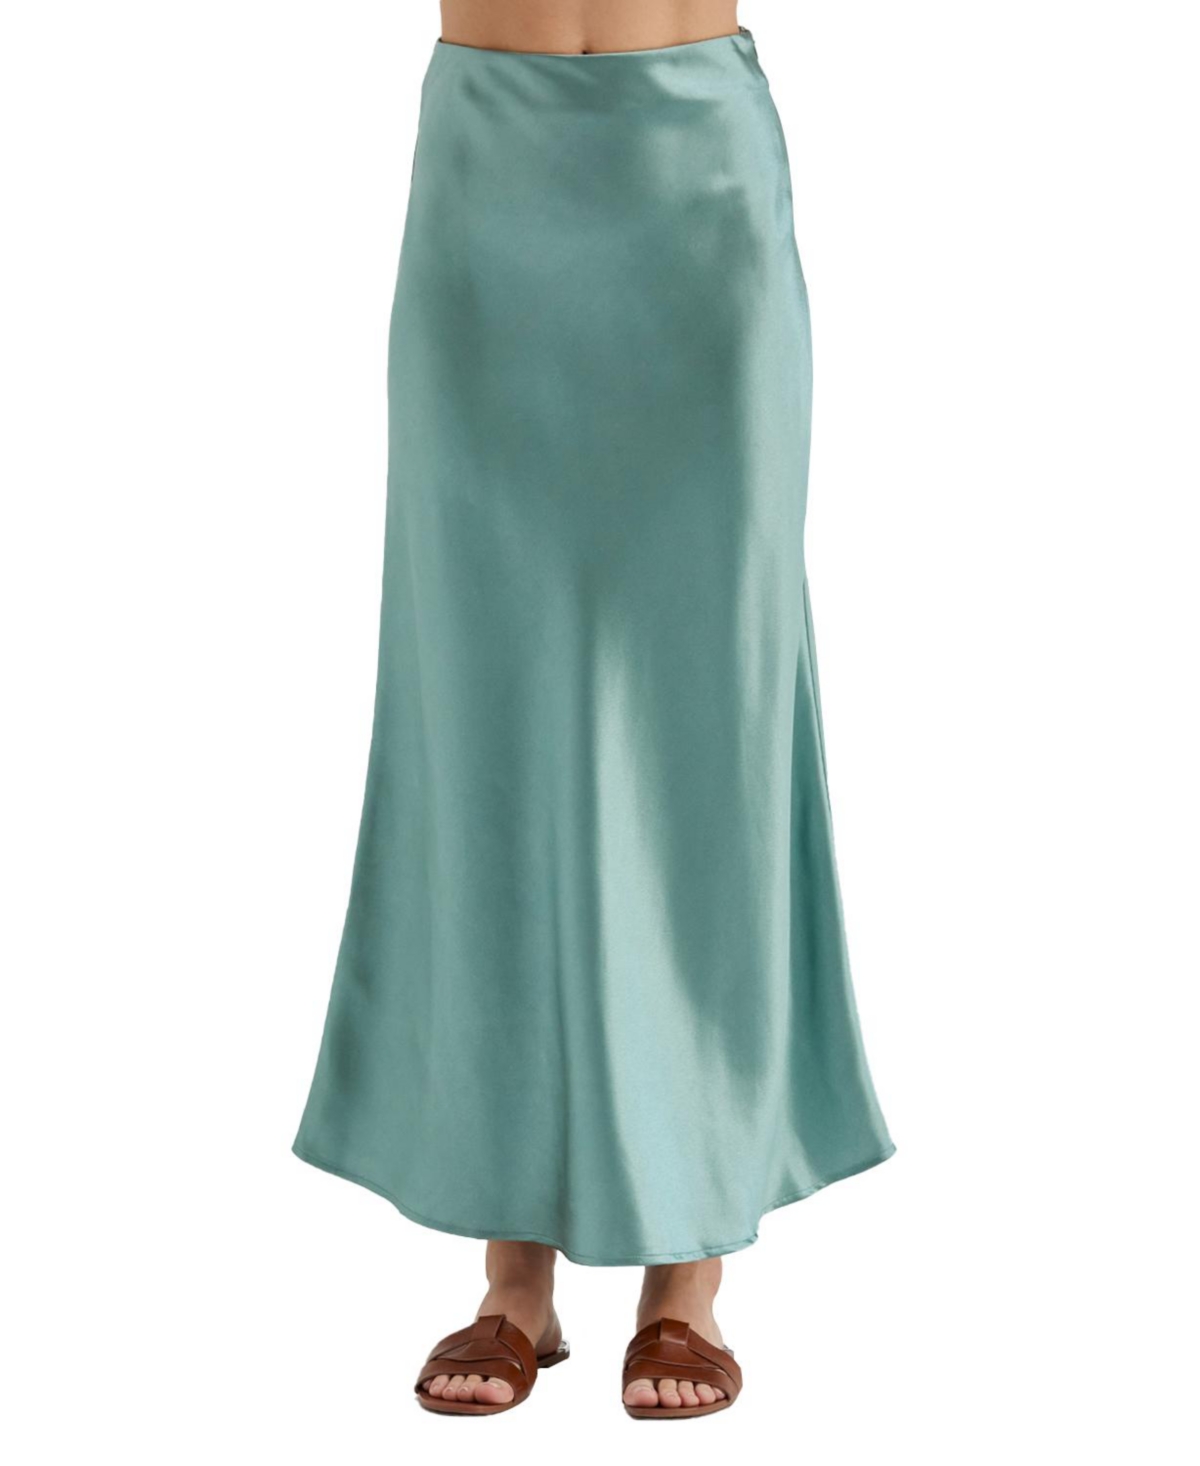 Women's Davina Bias Satin Skirt - Turquoise/aqua + teal